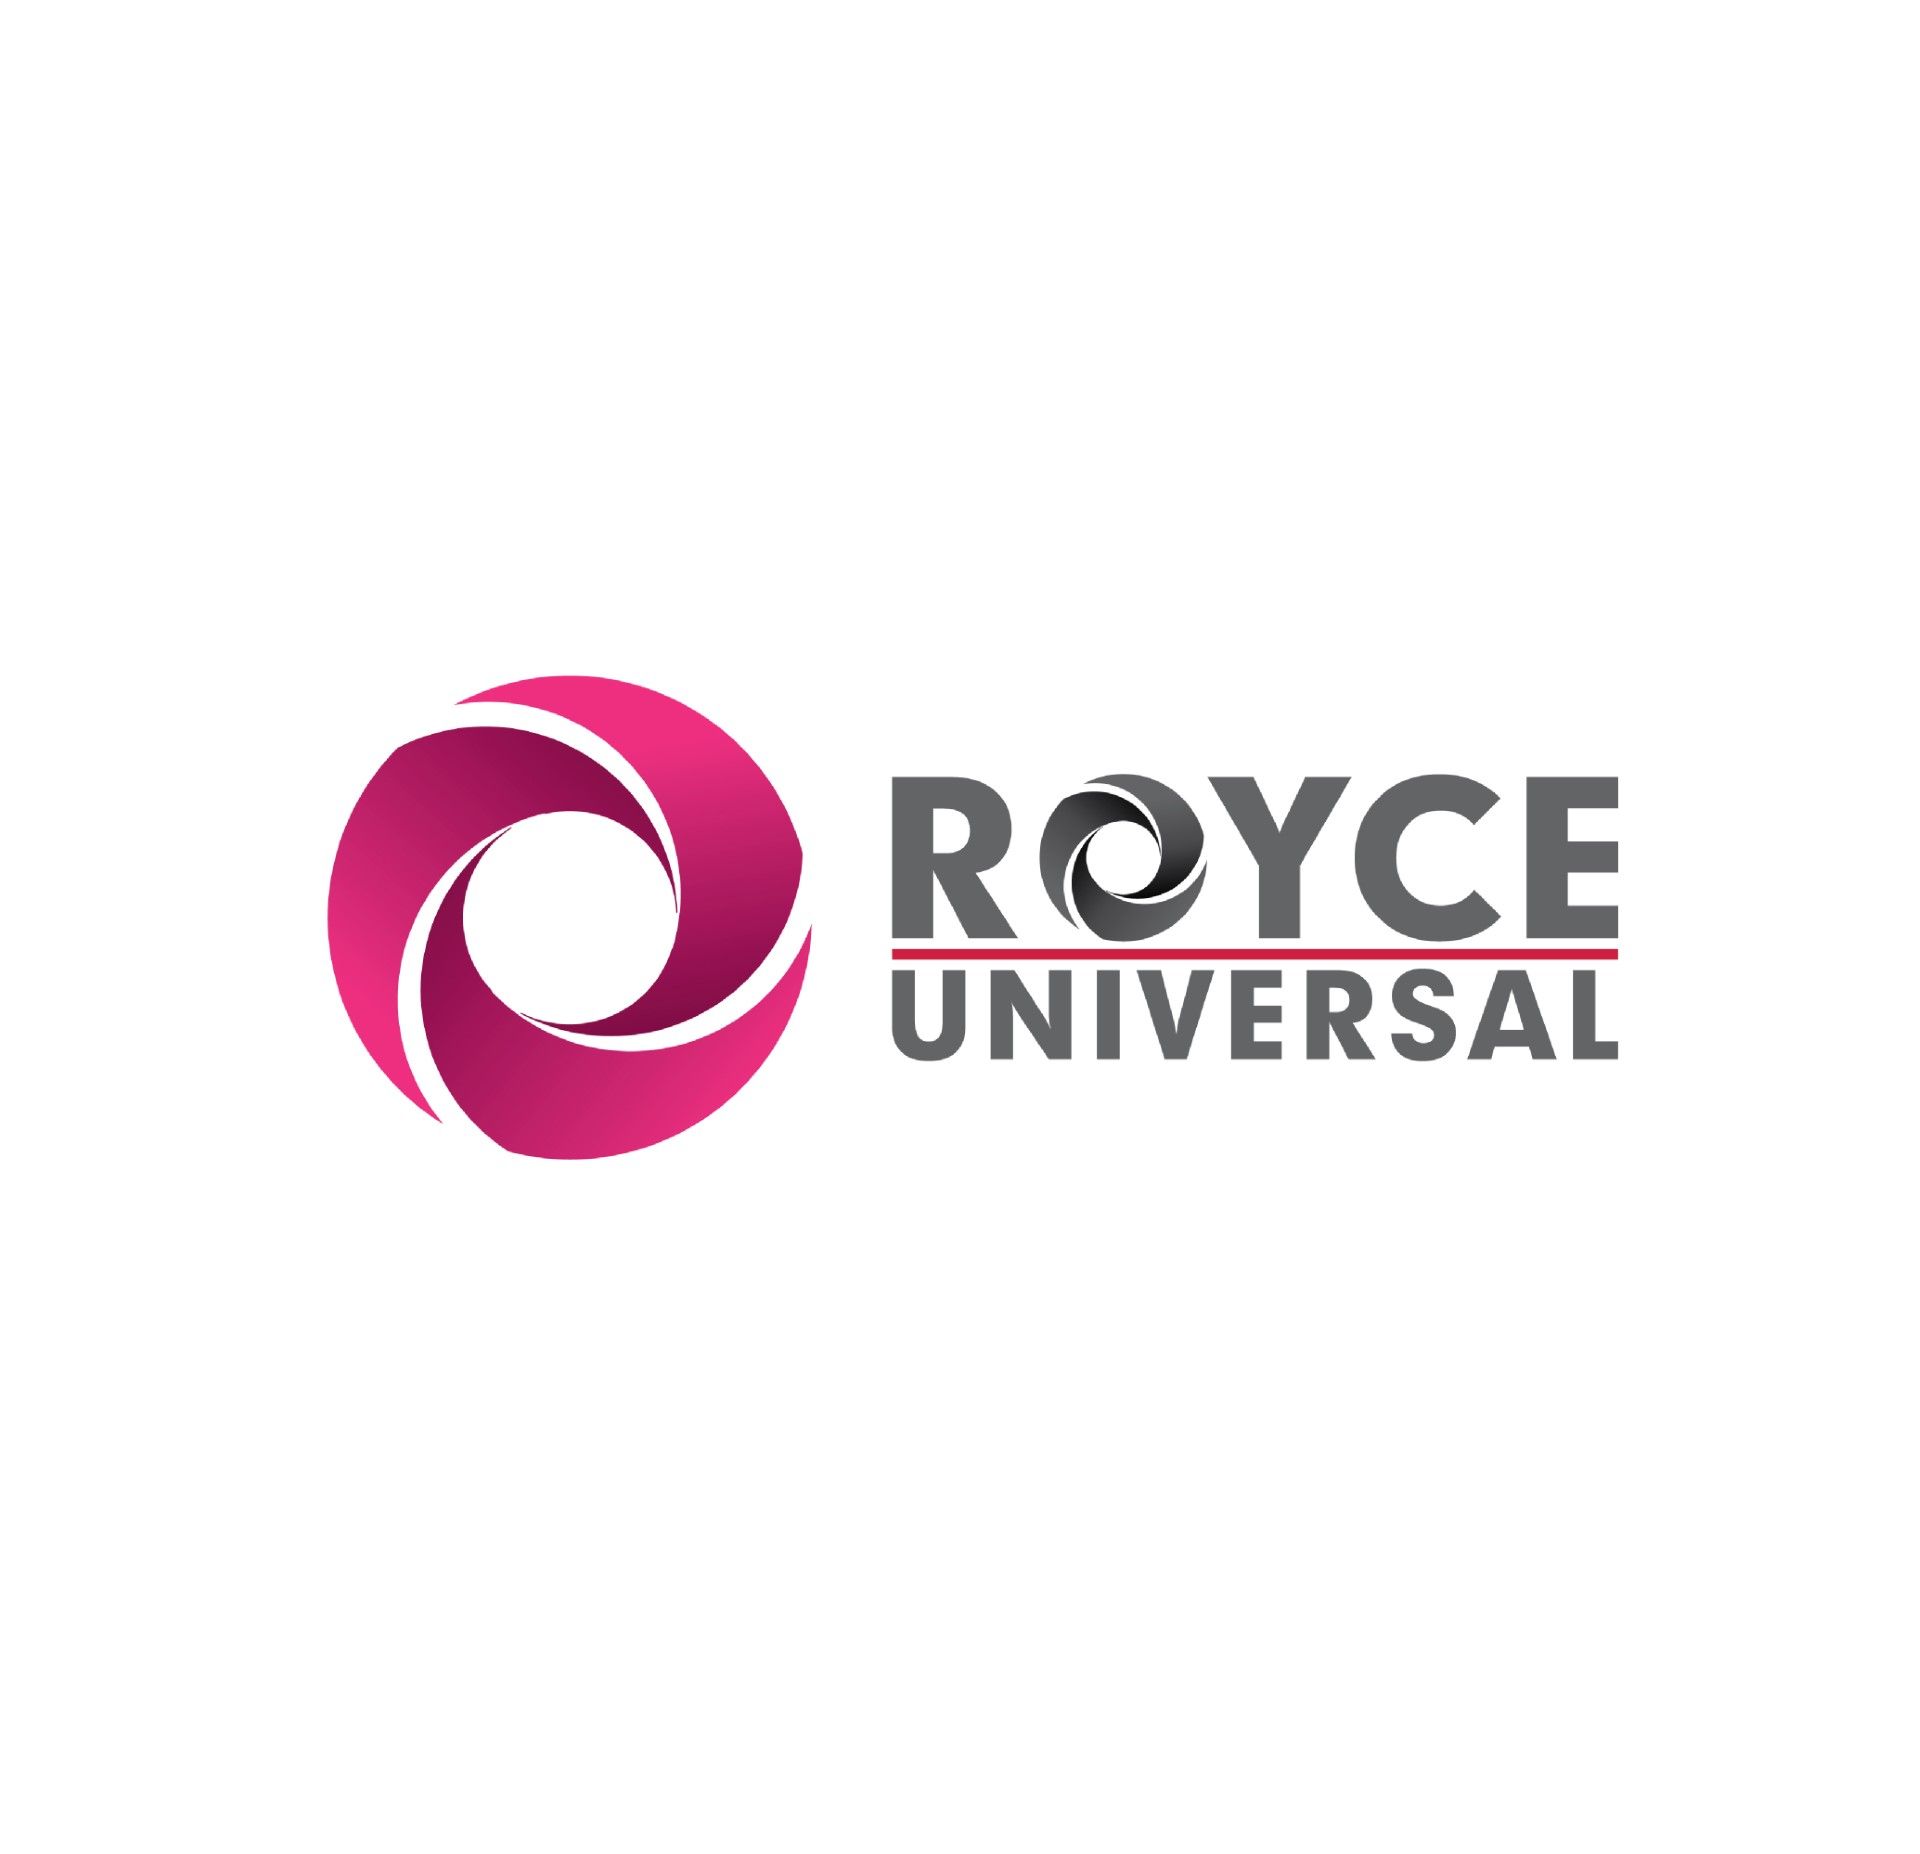 Royce Universal